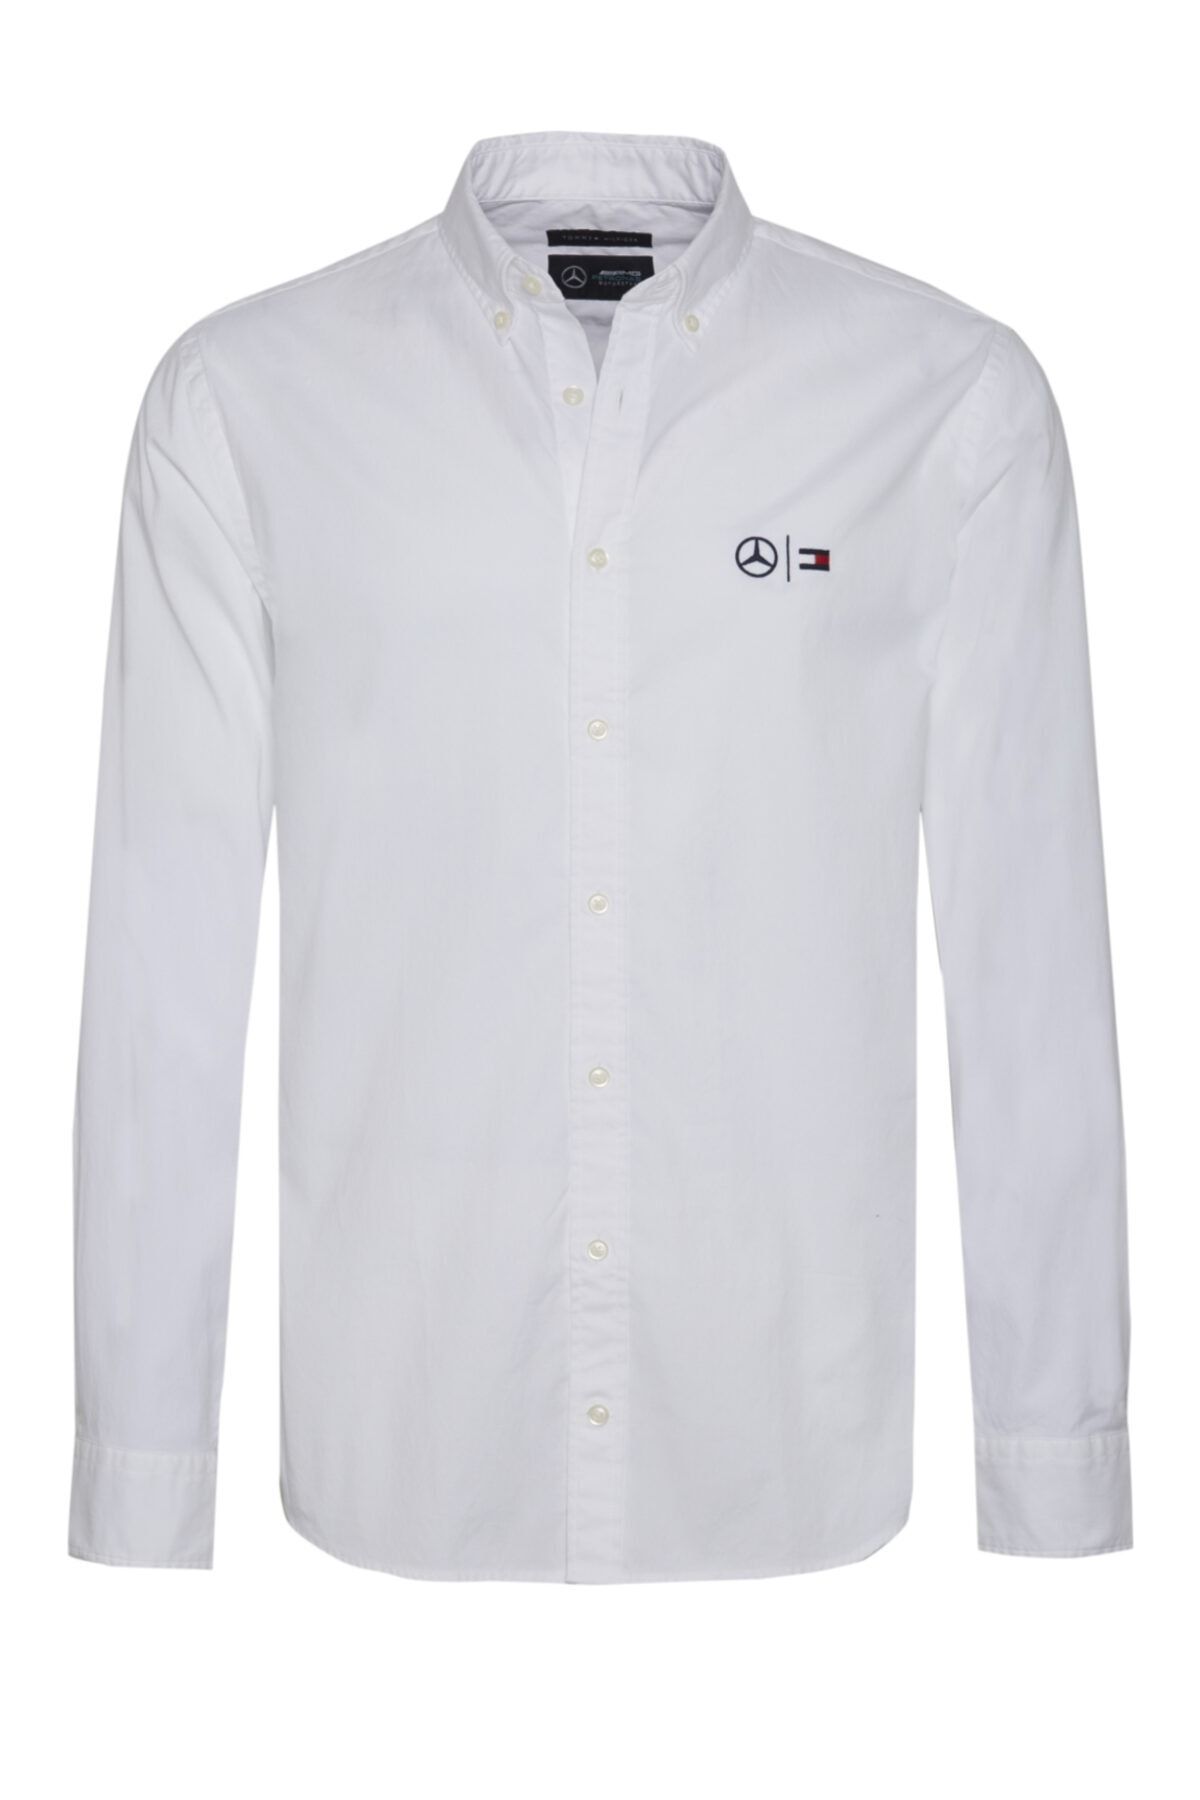 Tommy Hilfiger Erkek Beyaz Gömlek 2 Mb Oxford Shirt MW0MW09486